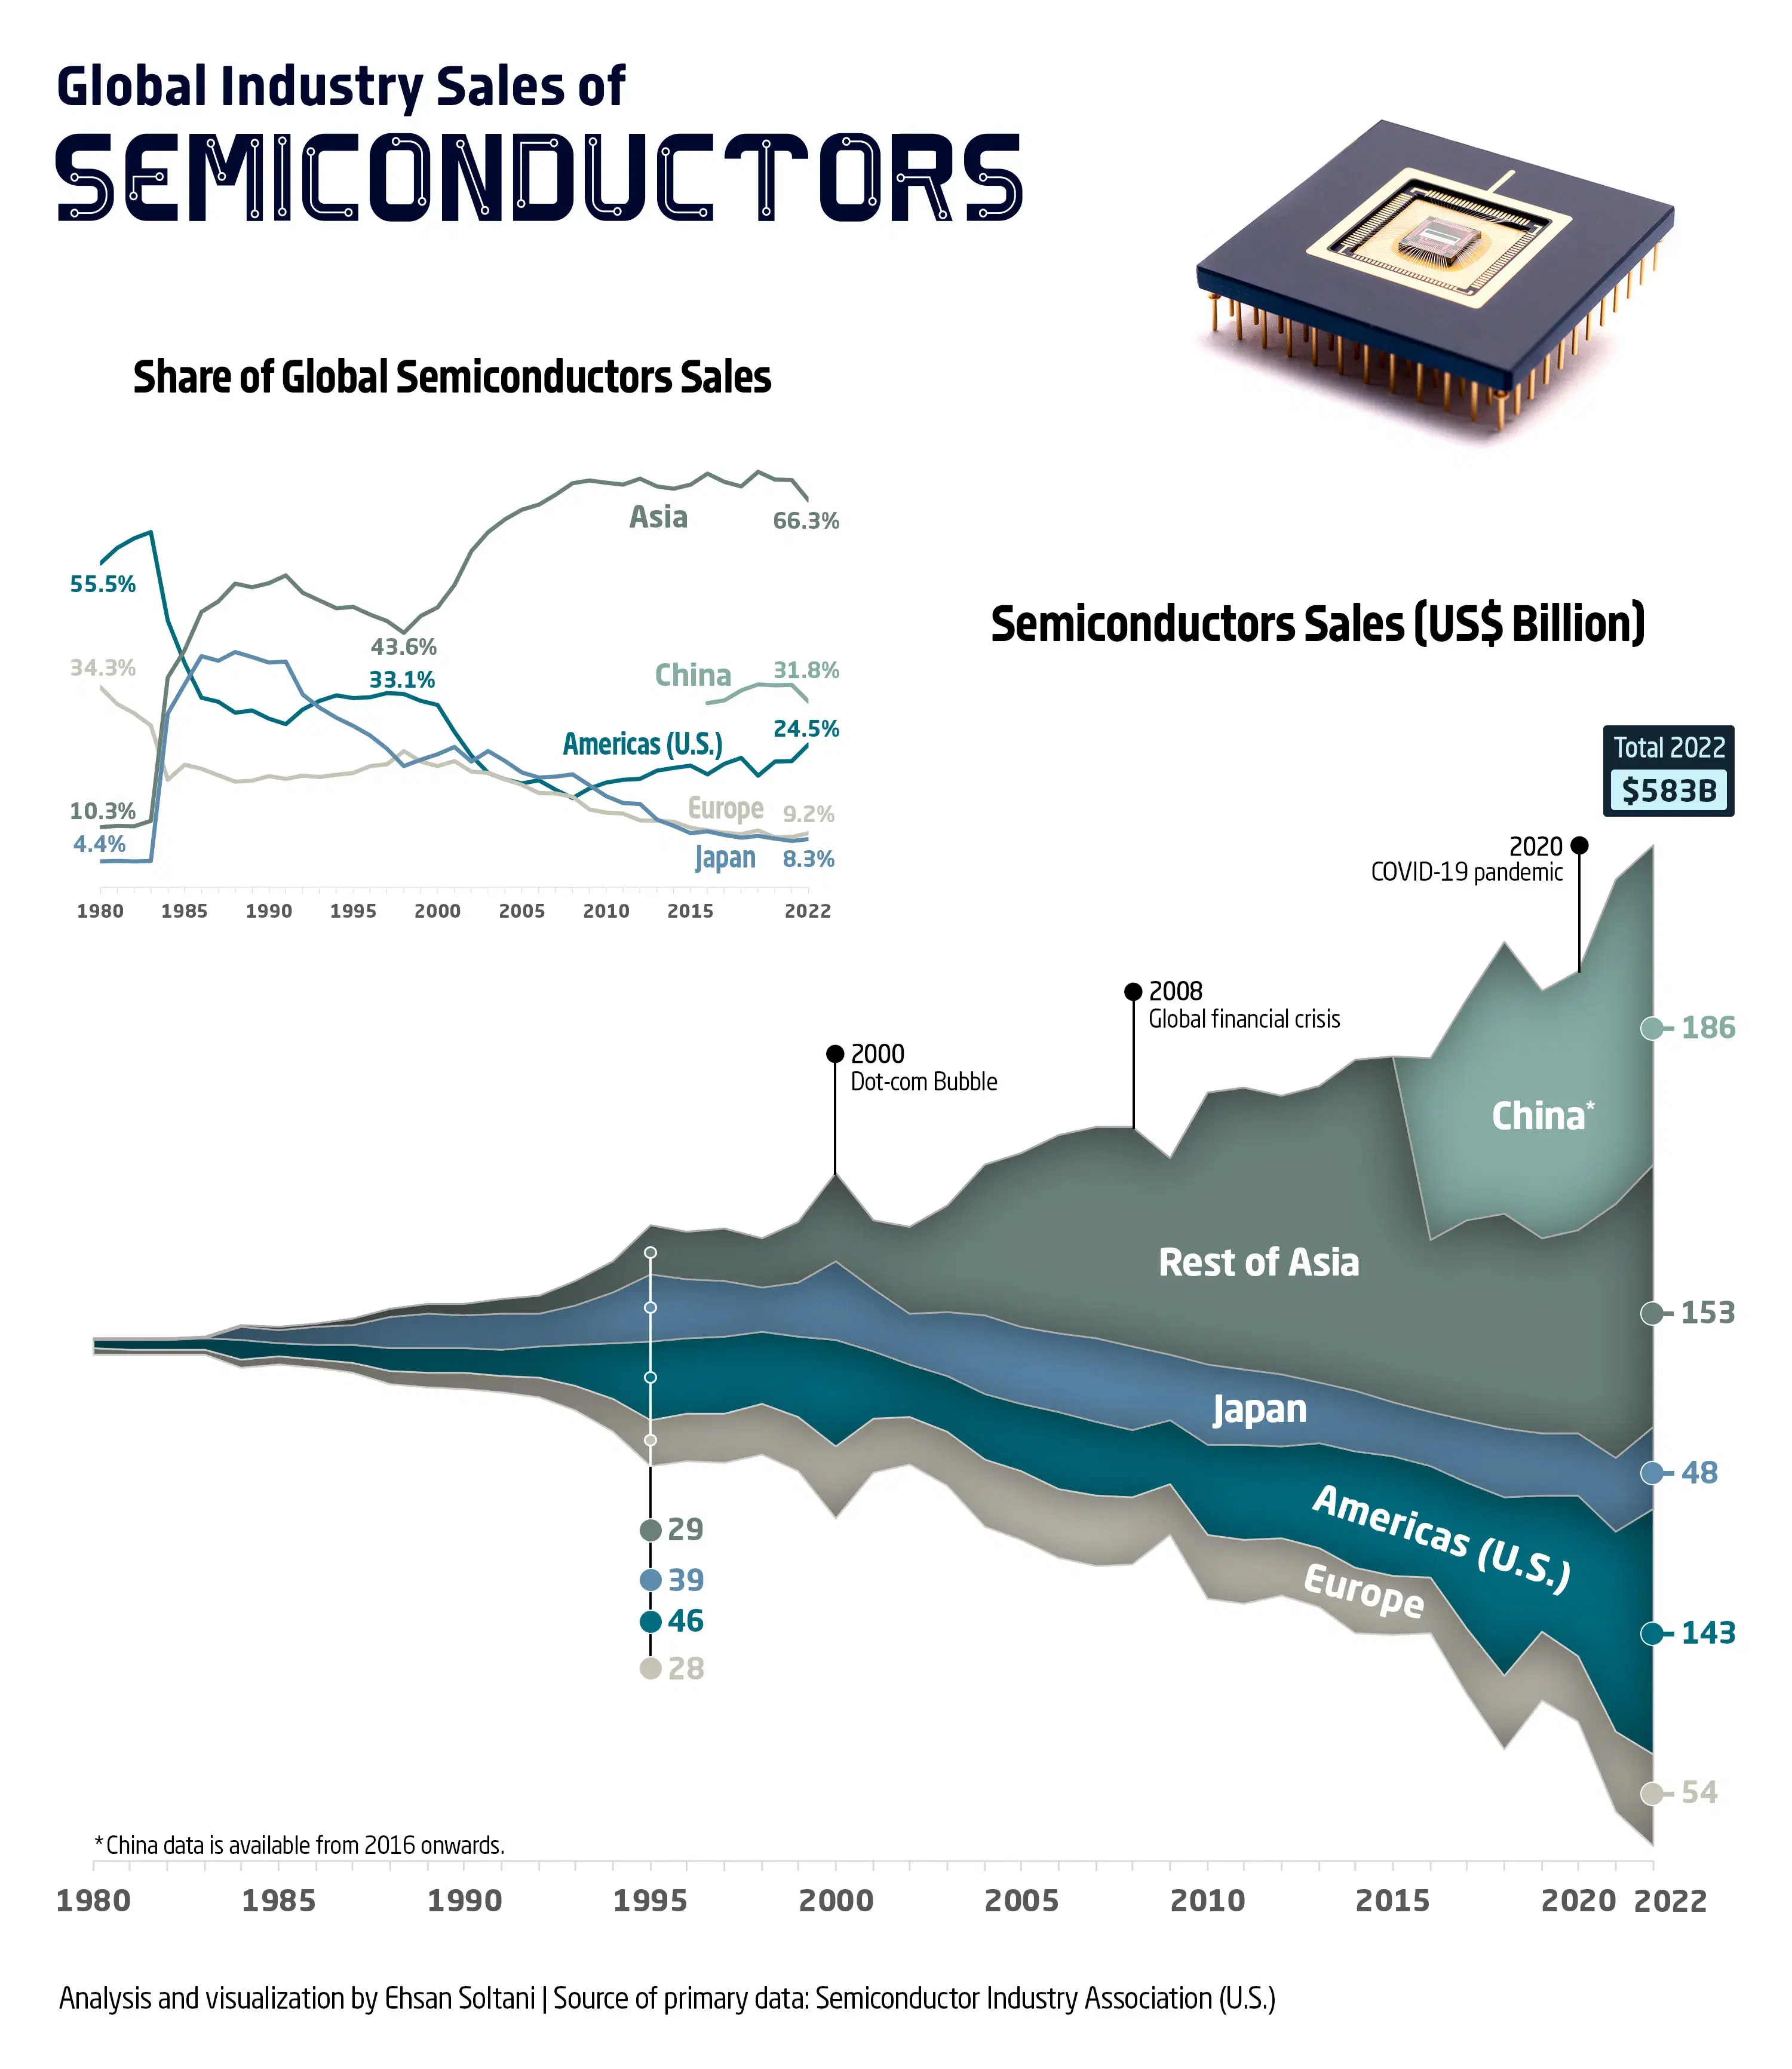 Global Industry Sales of Semiconductors